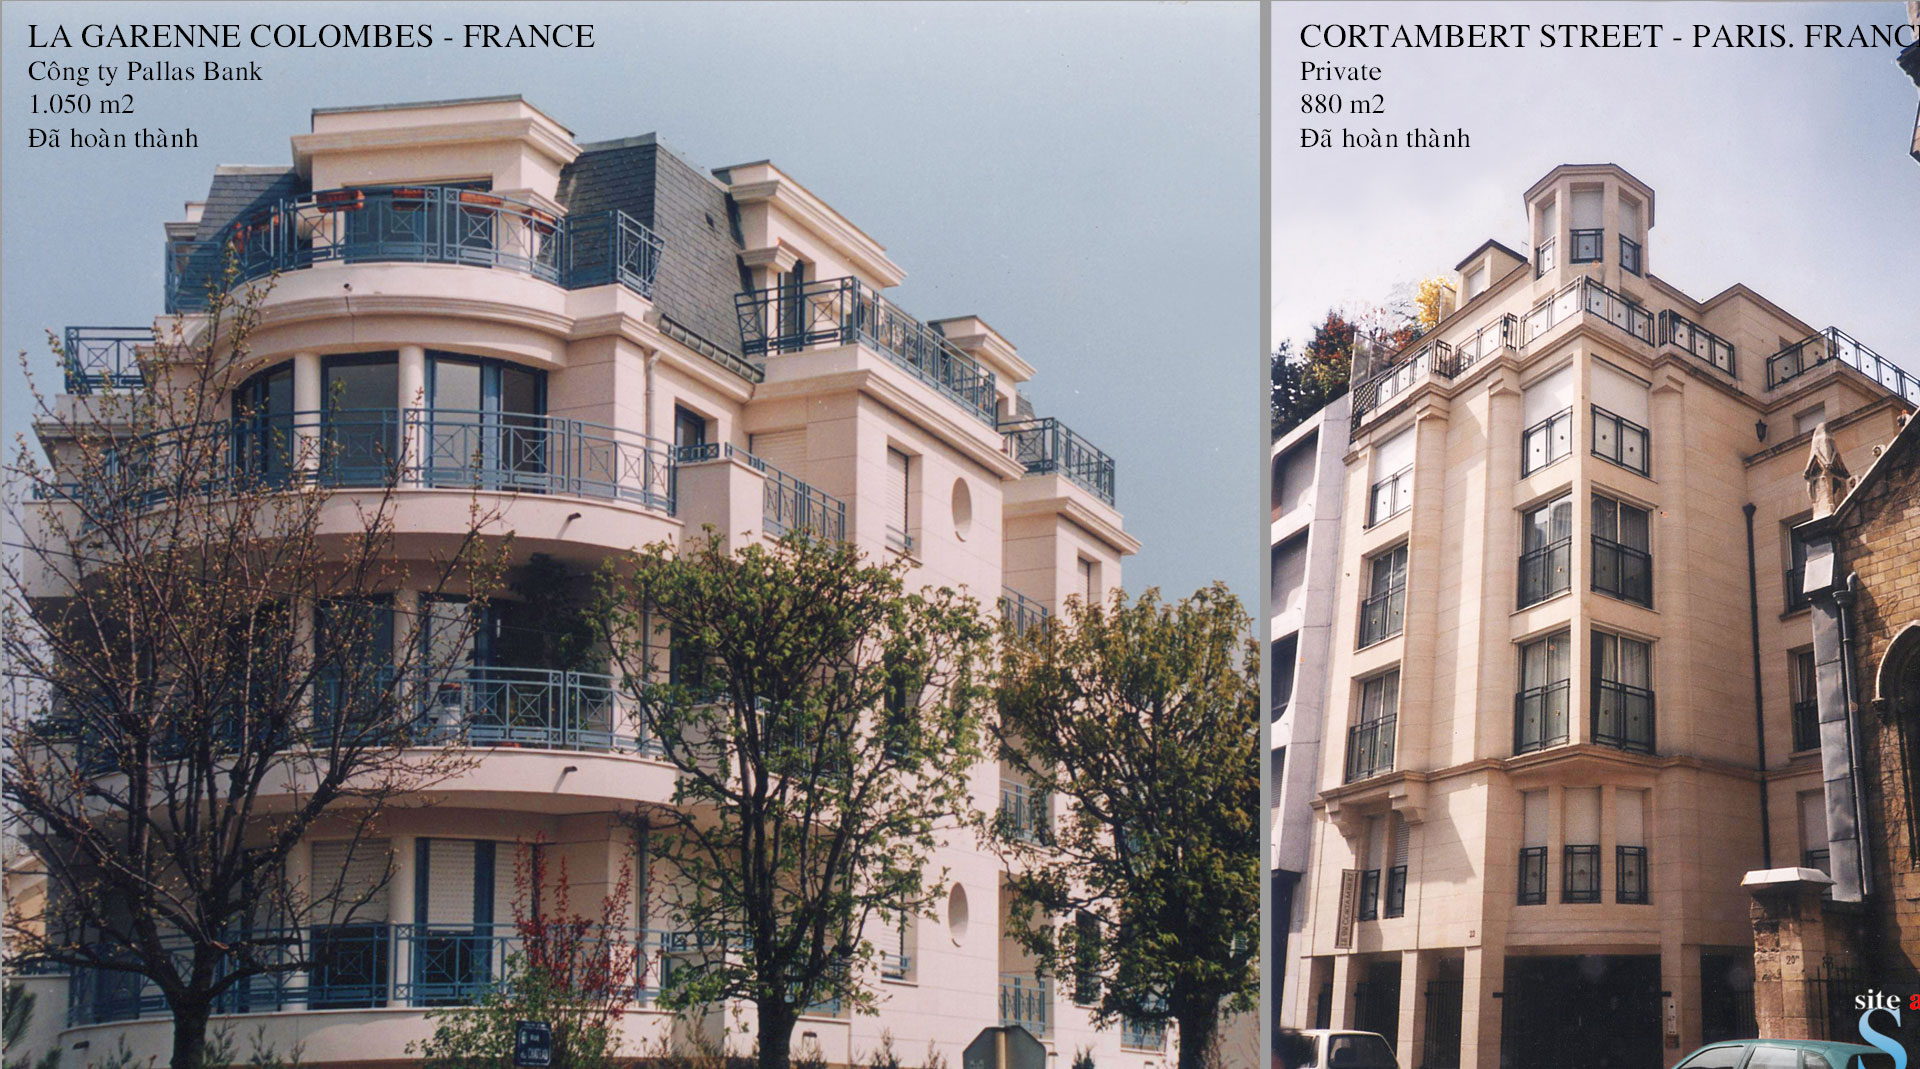 La Garenne Colombes & Cortambert  street,  Paris - France